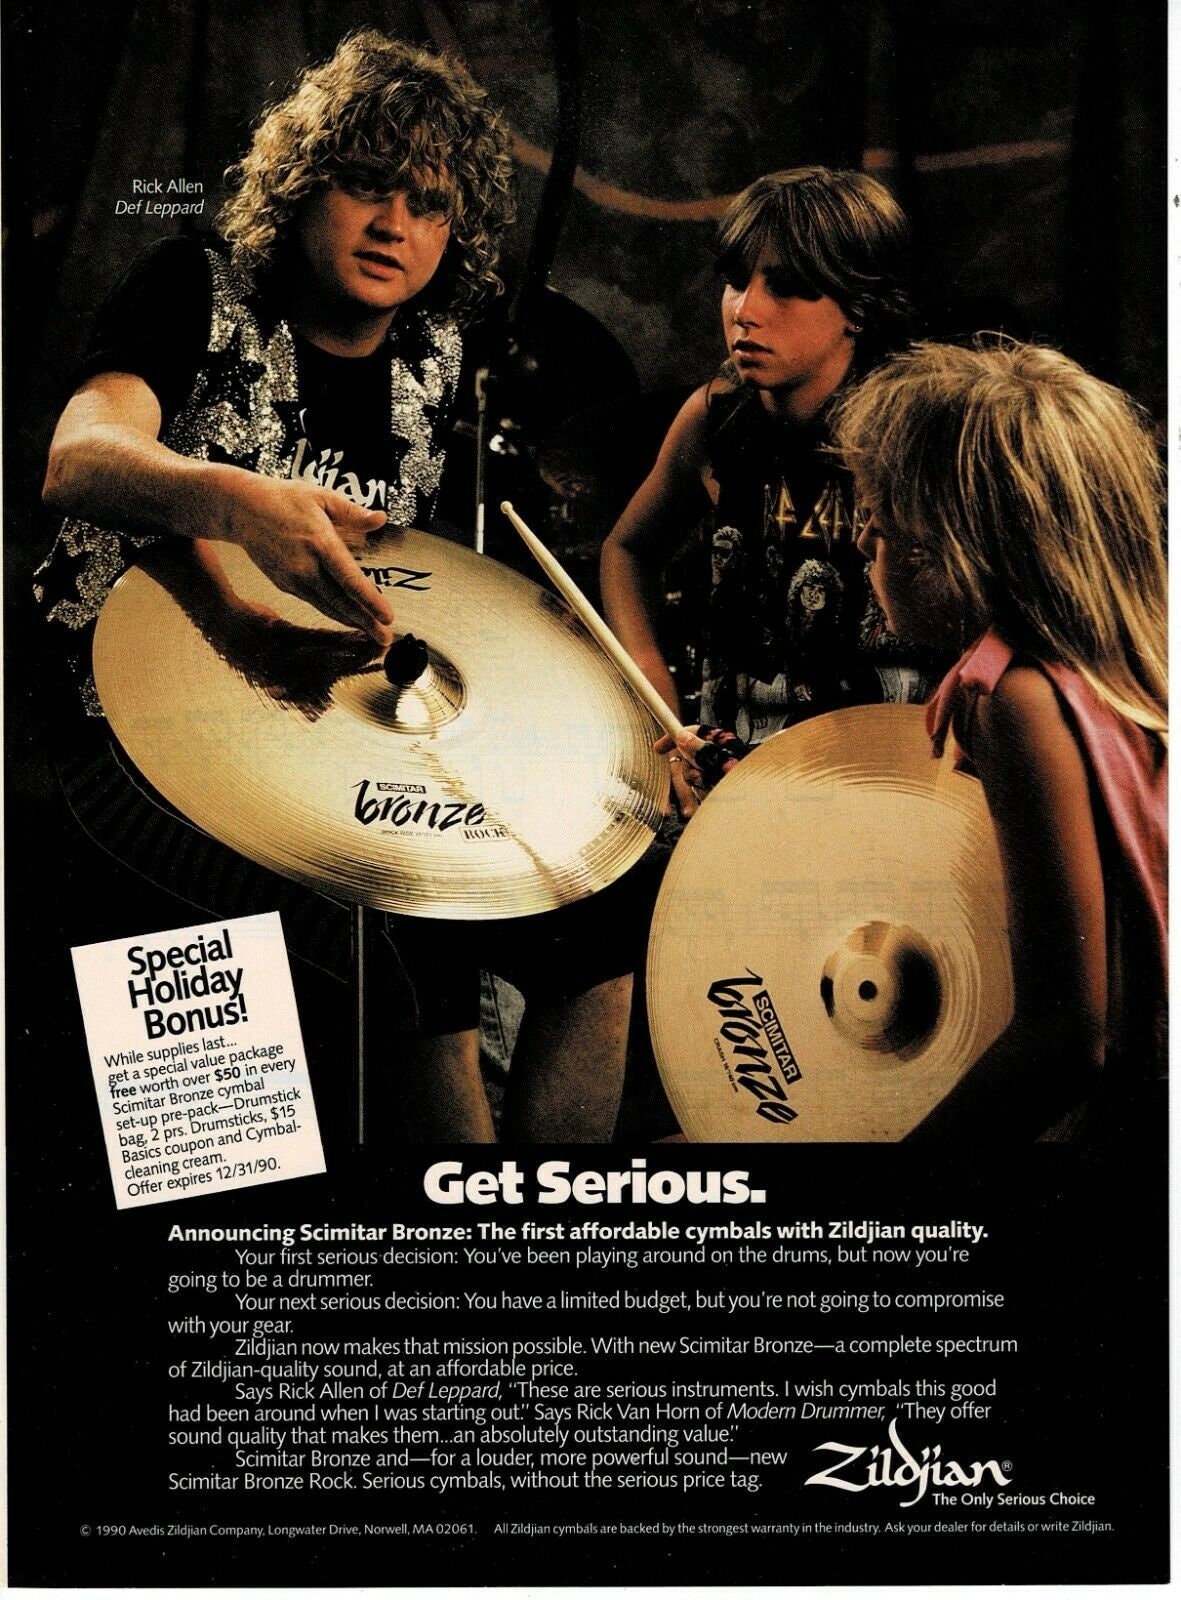 Cymbals　Leppard　OF　RICK　Zildjian　1991　日本　ALLEN　Etsy　Def　Print